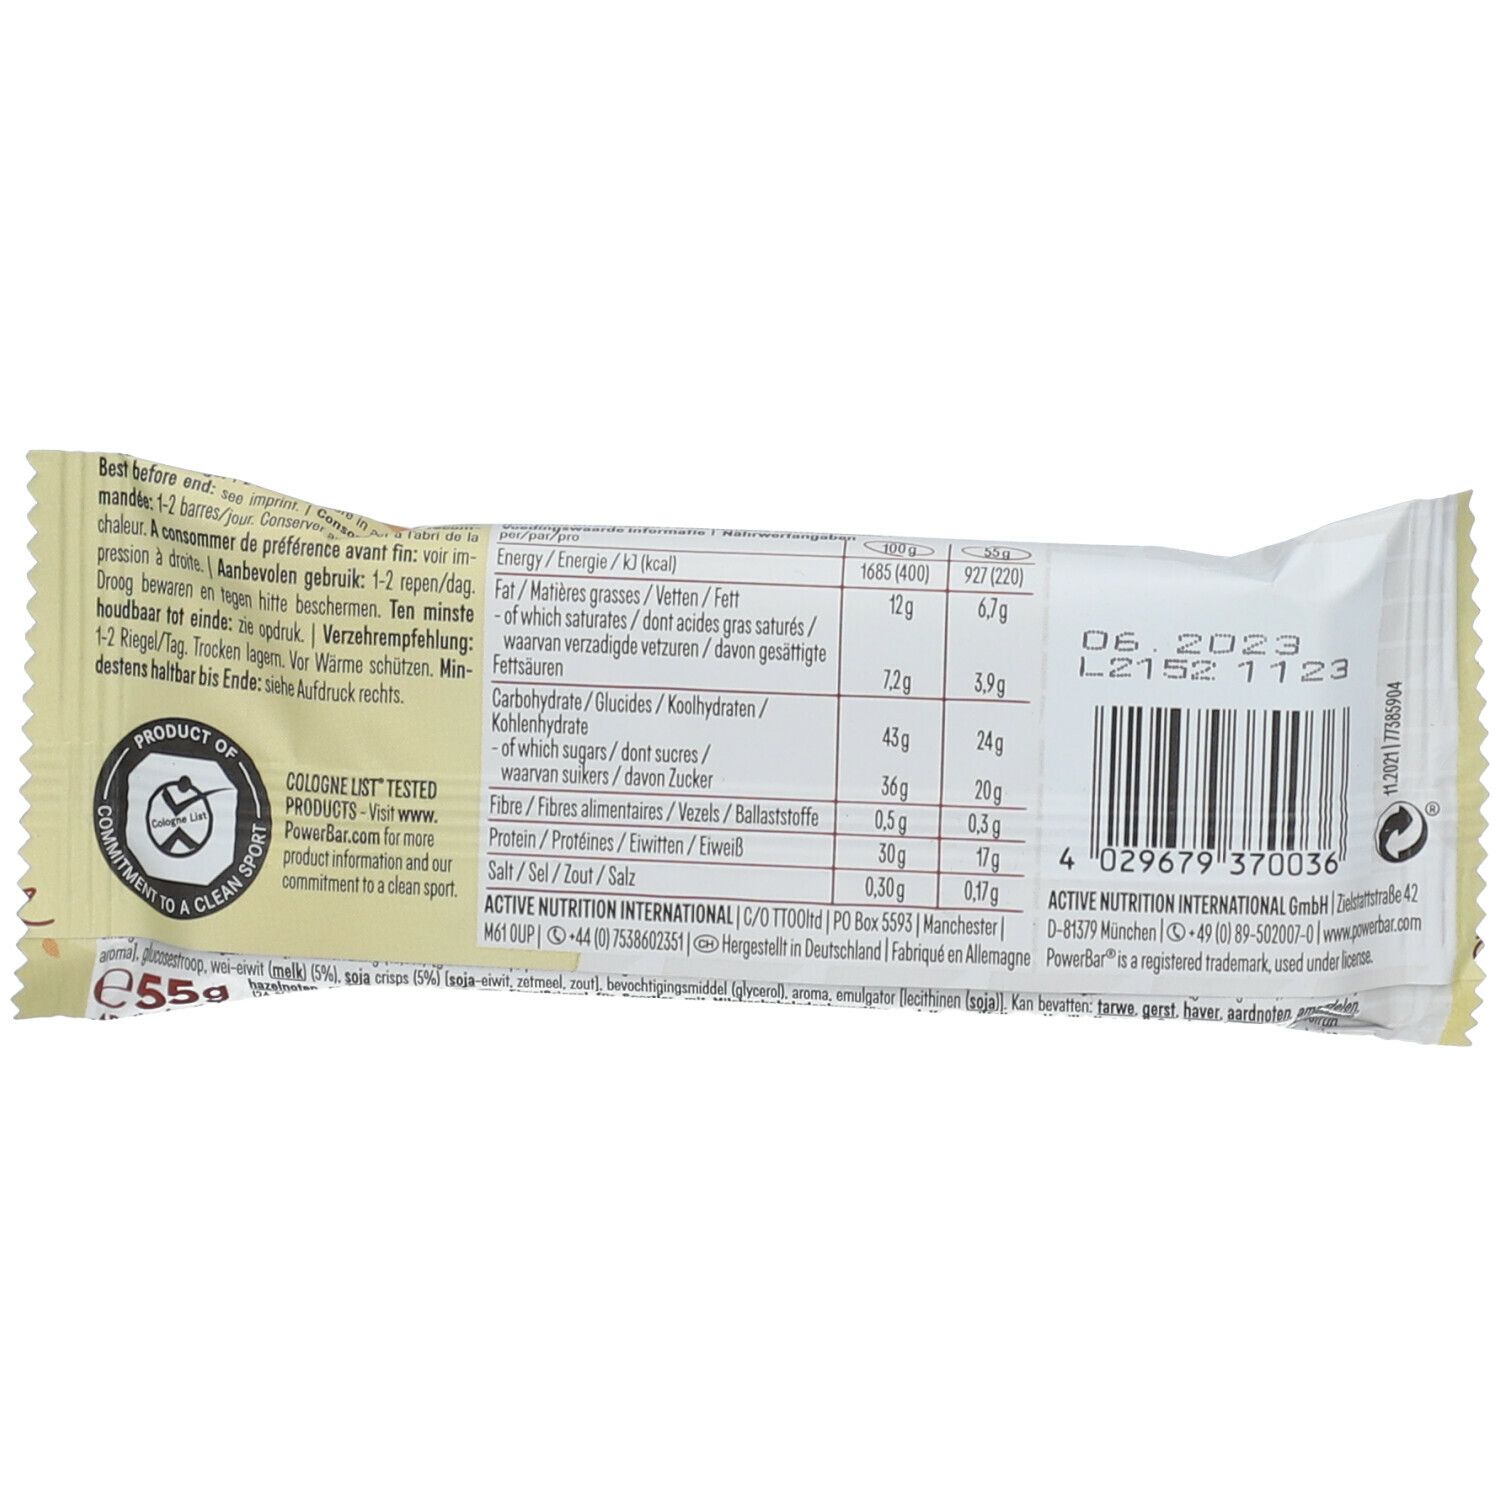 PowerBar® 30% Protein Plus Vanilla-Caramel Crisp